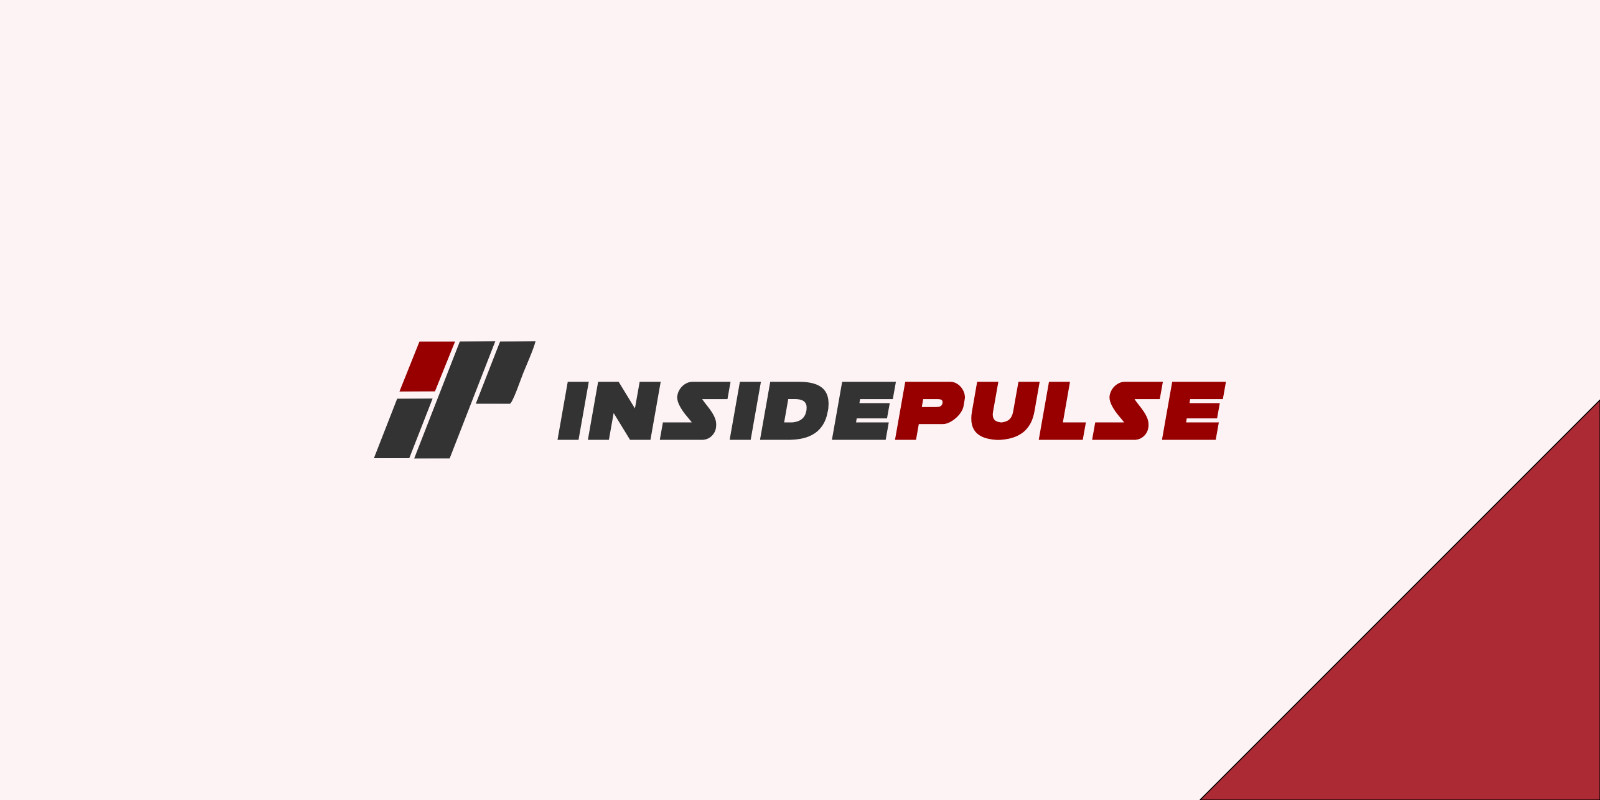 (c) Insidepulse.com